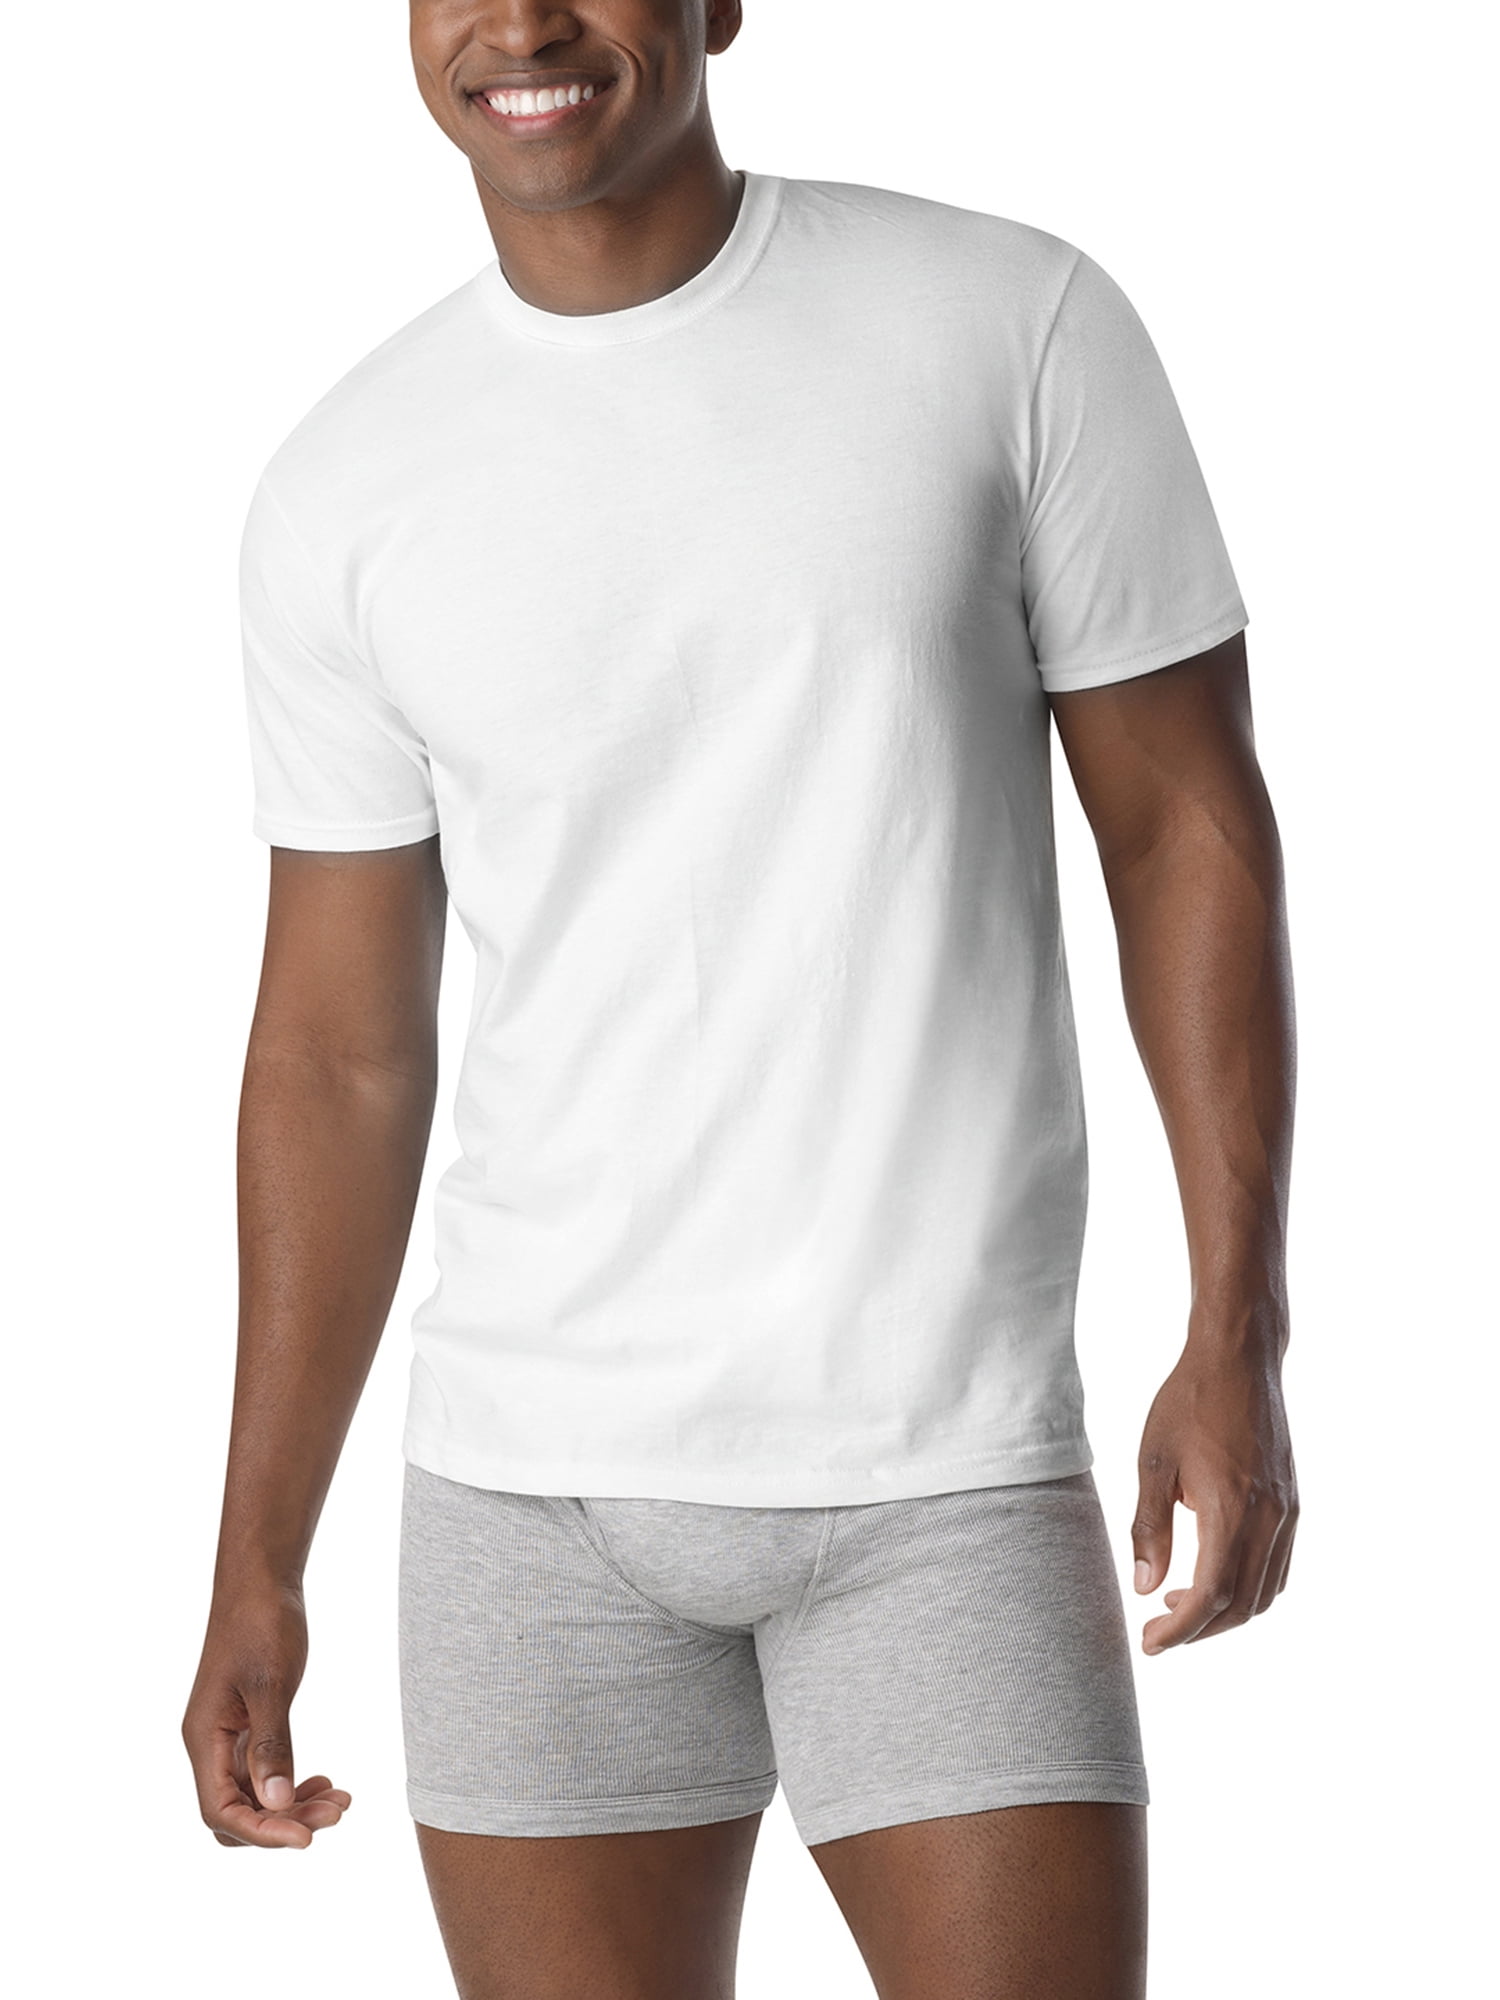 Men's ComfortSoft White Crew Neck T-Shirt 6 + 3 Free Bonus Pack ...